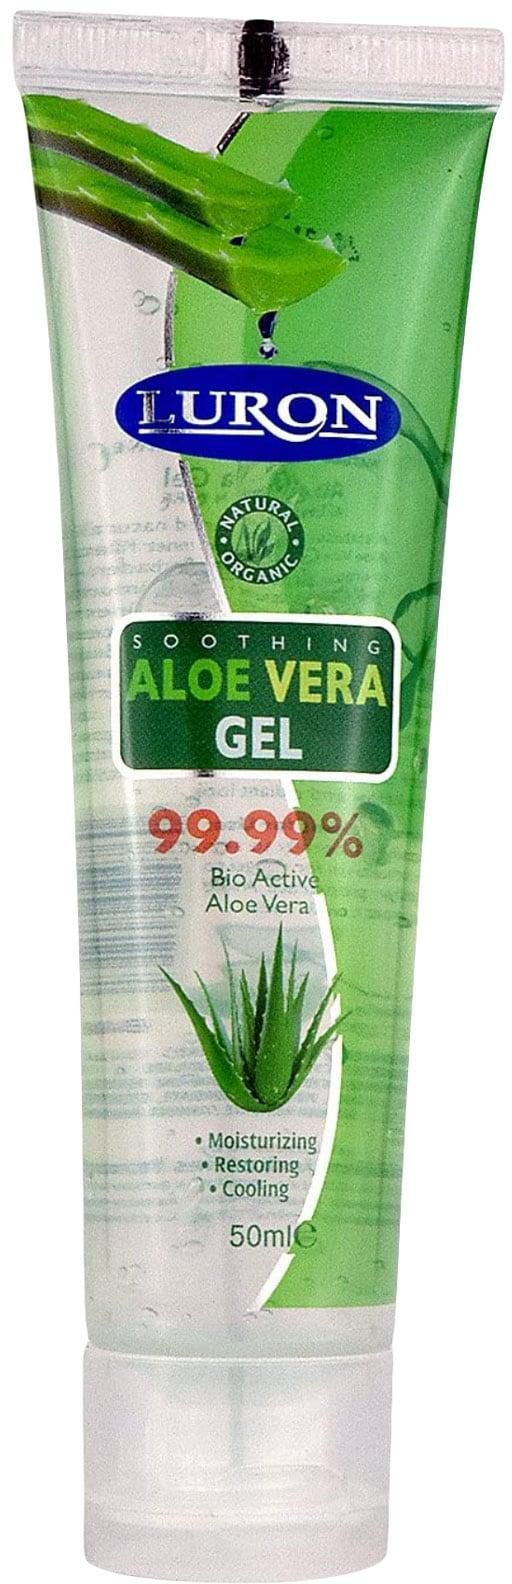 Luron Aloe Vera Gel 50Ml